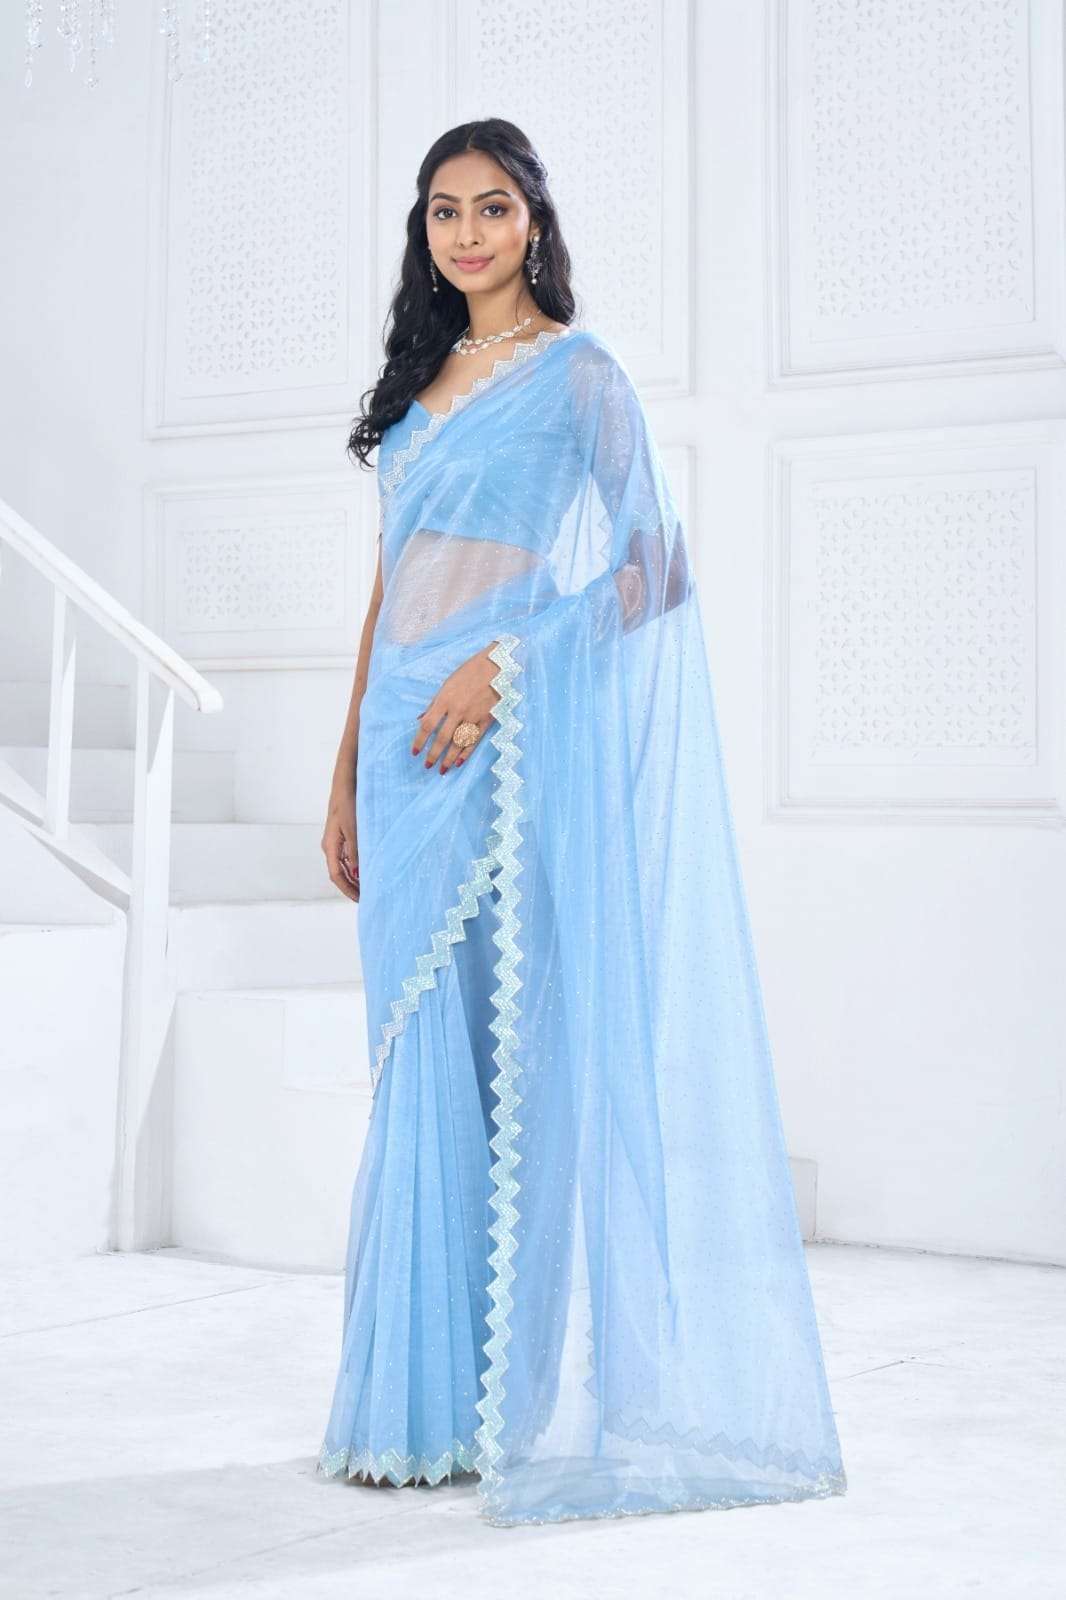 Mehek 796 Colors Exclusive Latest Designer Style Party Wear Saree Wholesalers